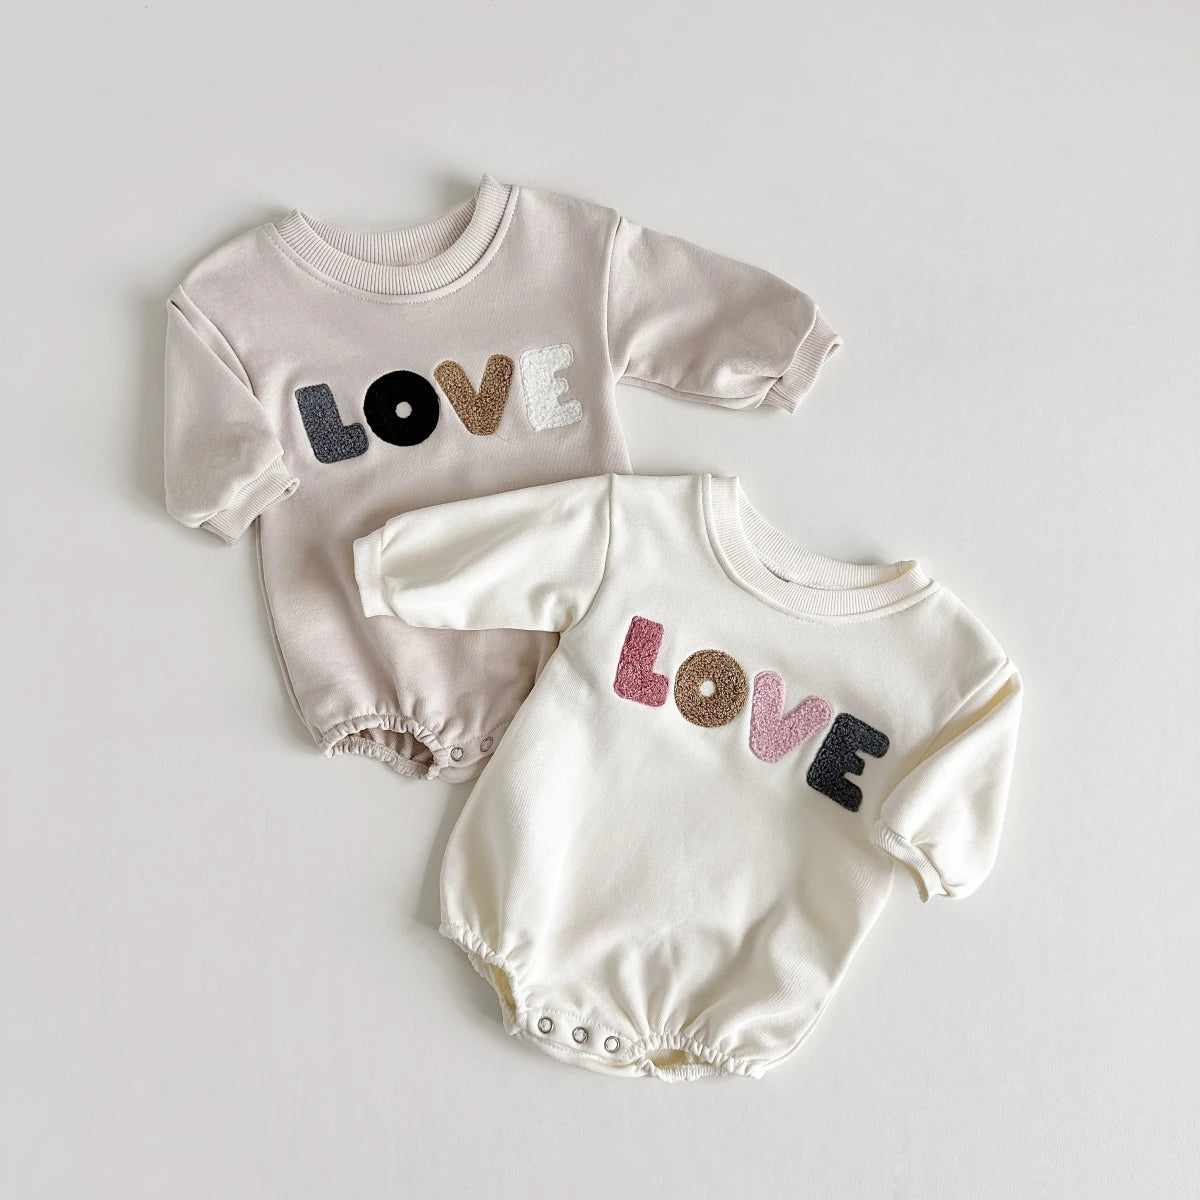 LOVE Embroidery Sweatshirt Romper